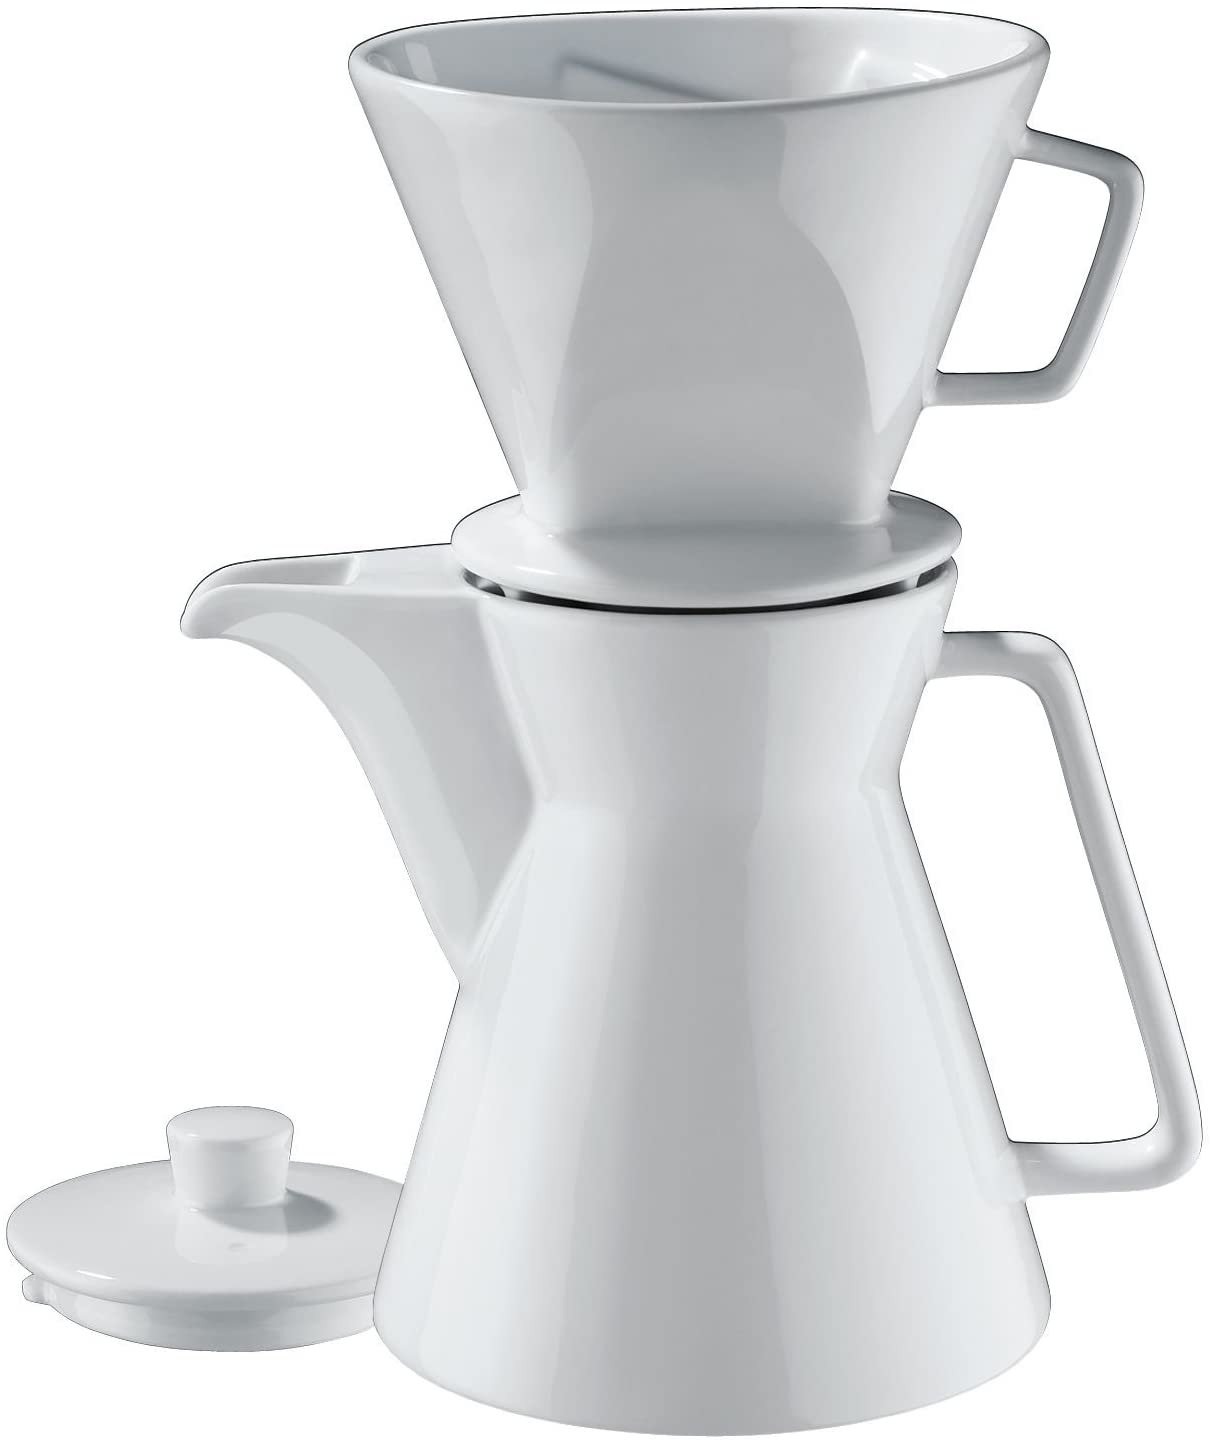 Cilio Premium Vienna Akantus White Porcelain 1l Coffee Pot & 4 Cup Filter Holder